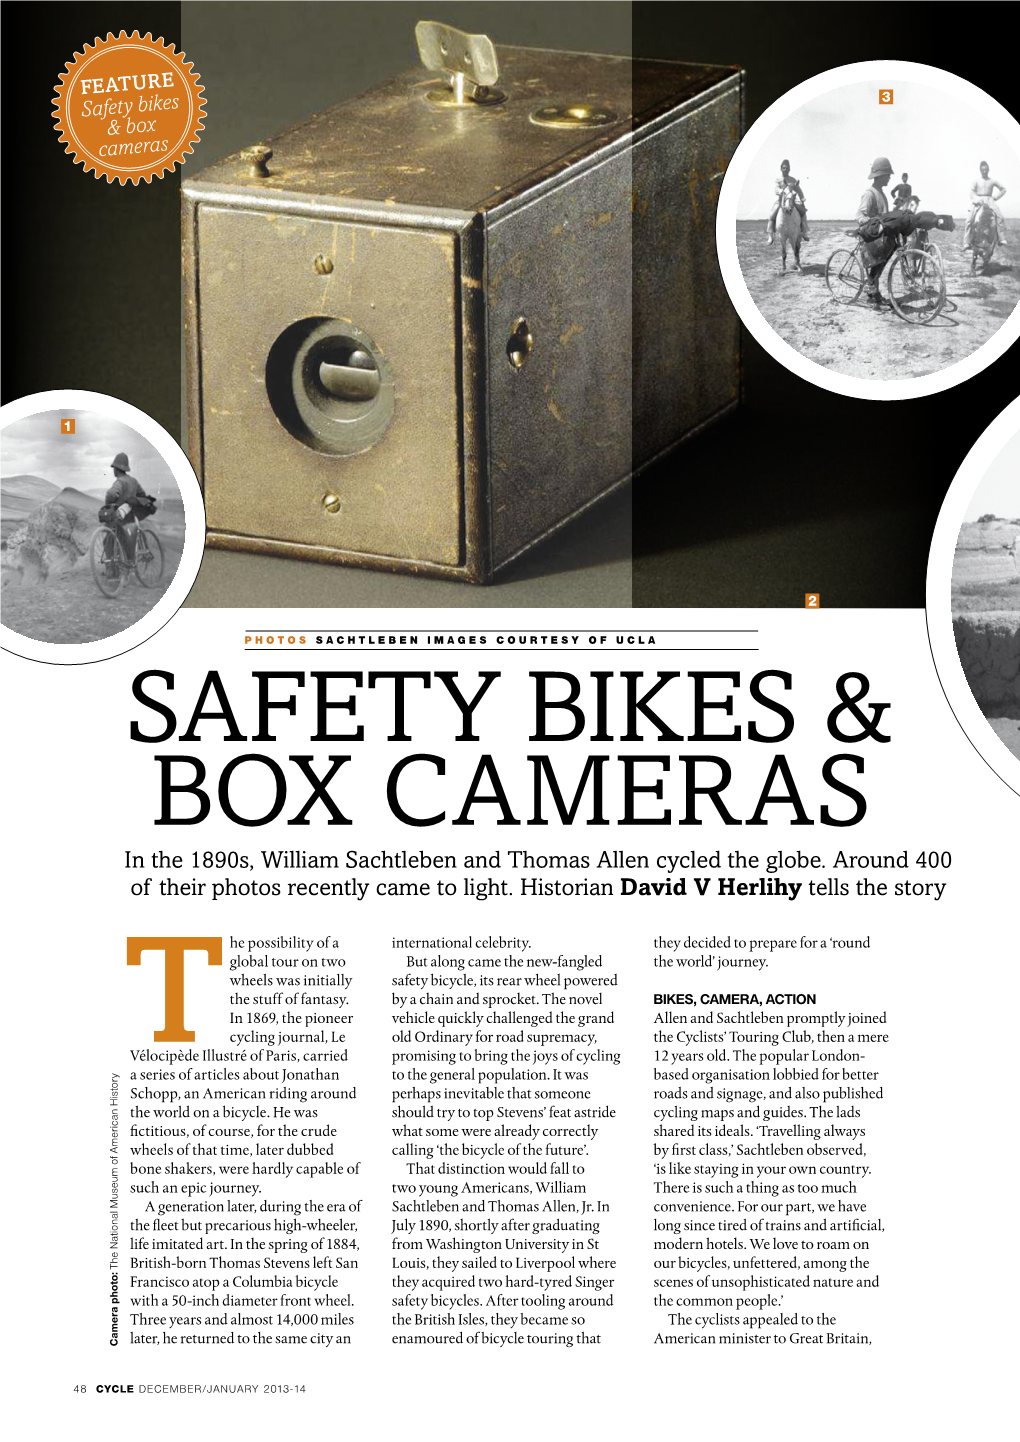 14. Safety Bikes & Box Cameras